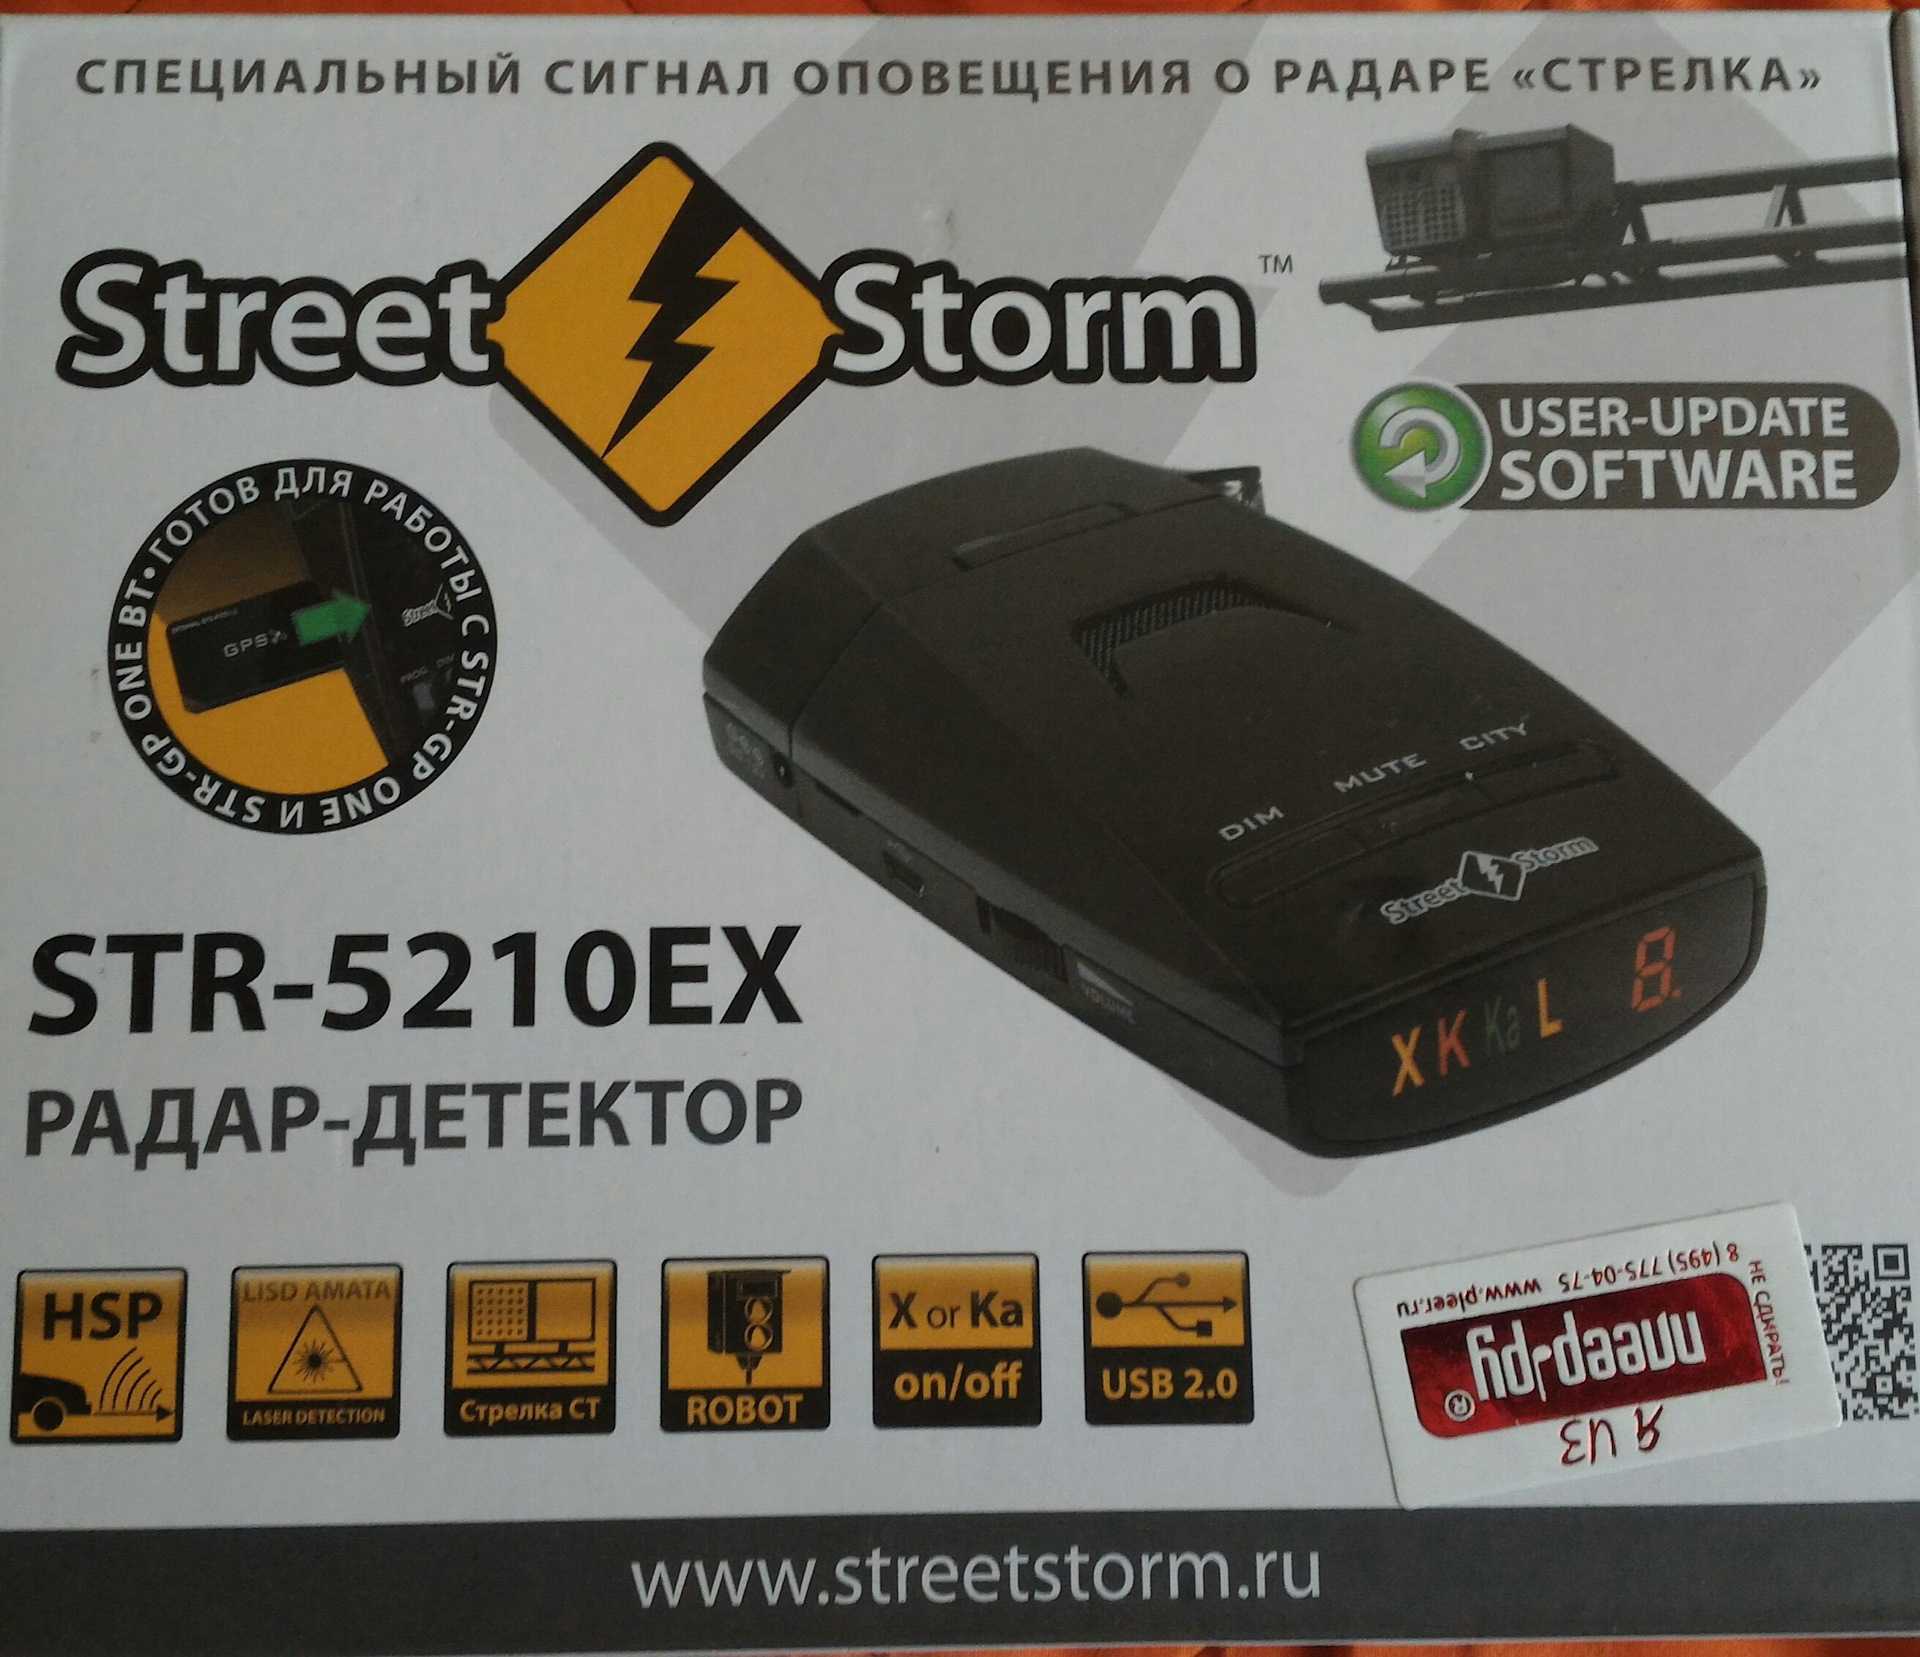 Street storm str-5210ex signature edition